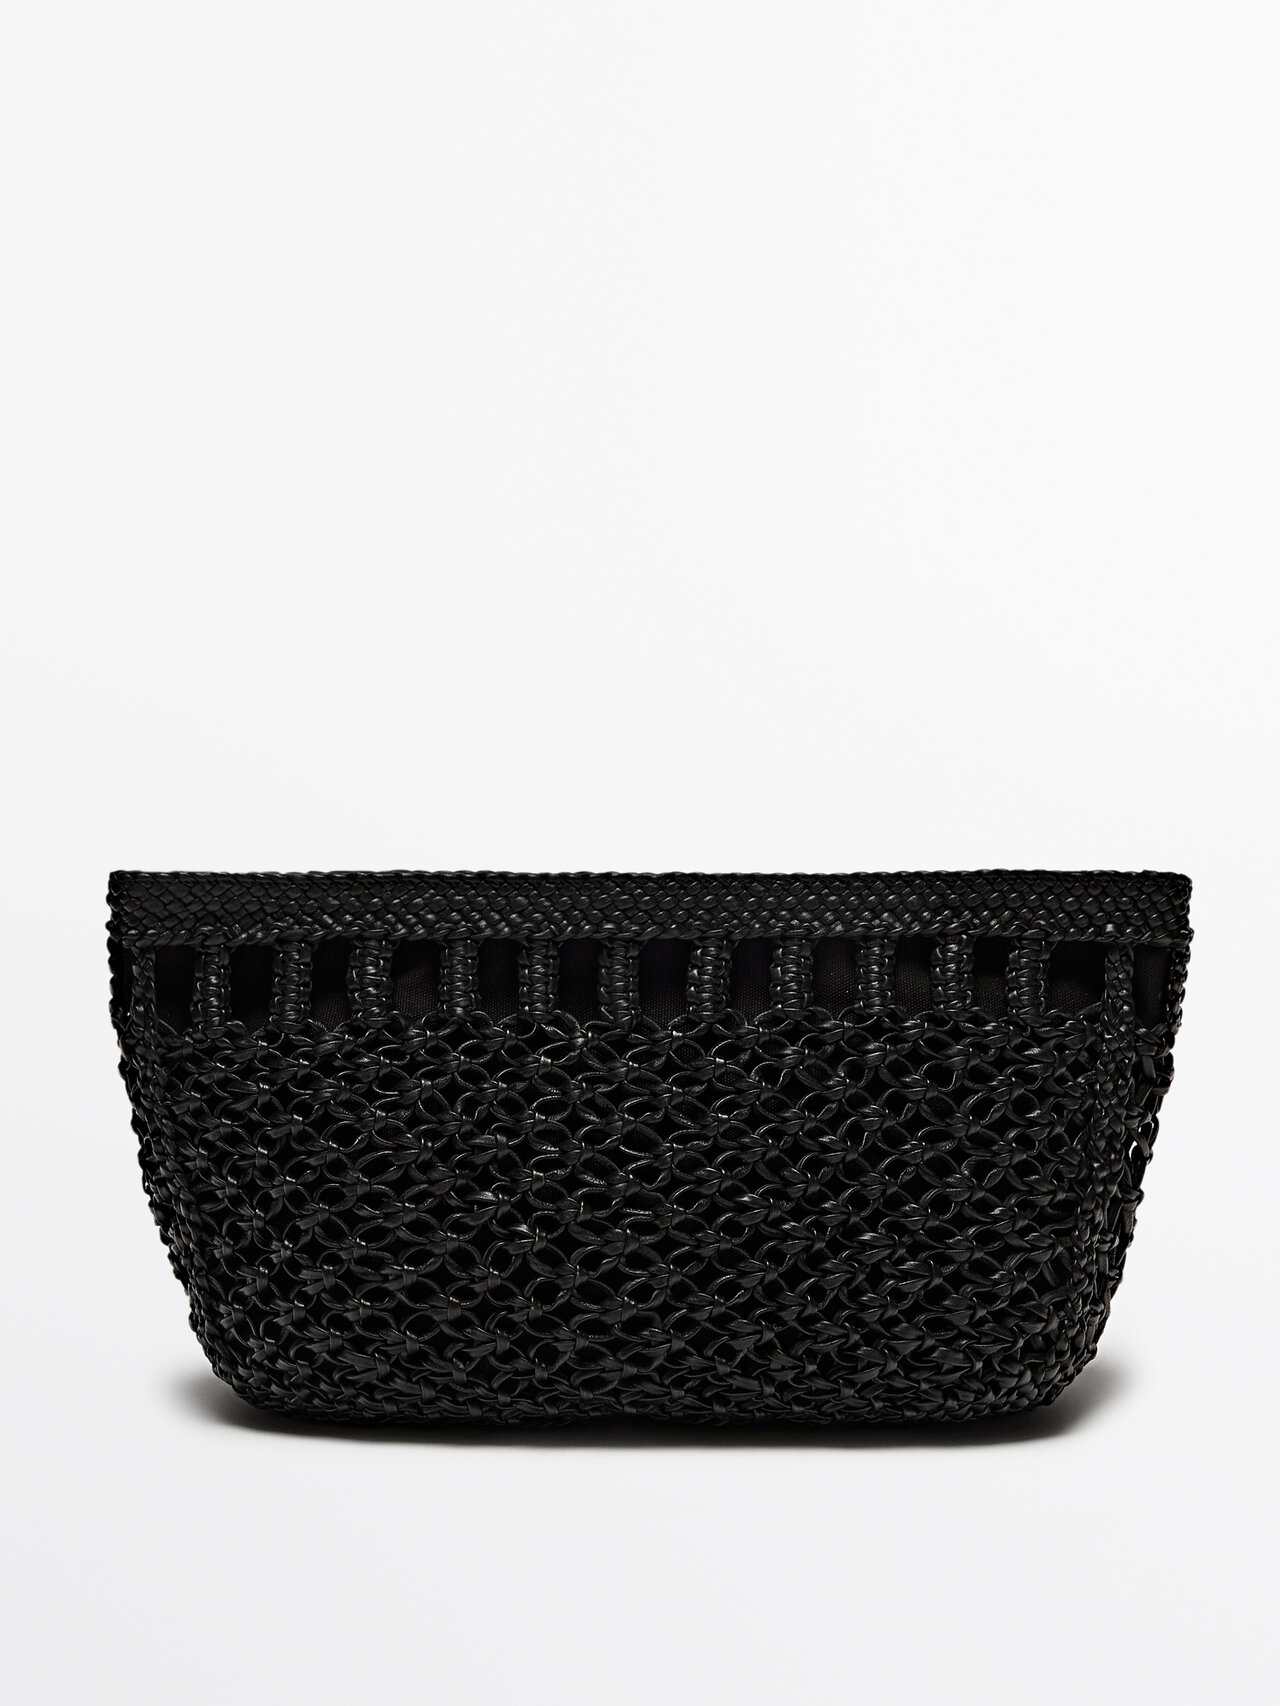 Massimo Dutti Nappa Leather Woven Croissant Bag In Black